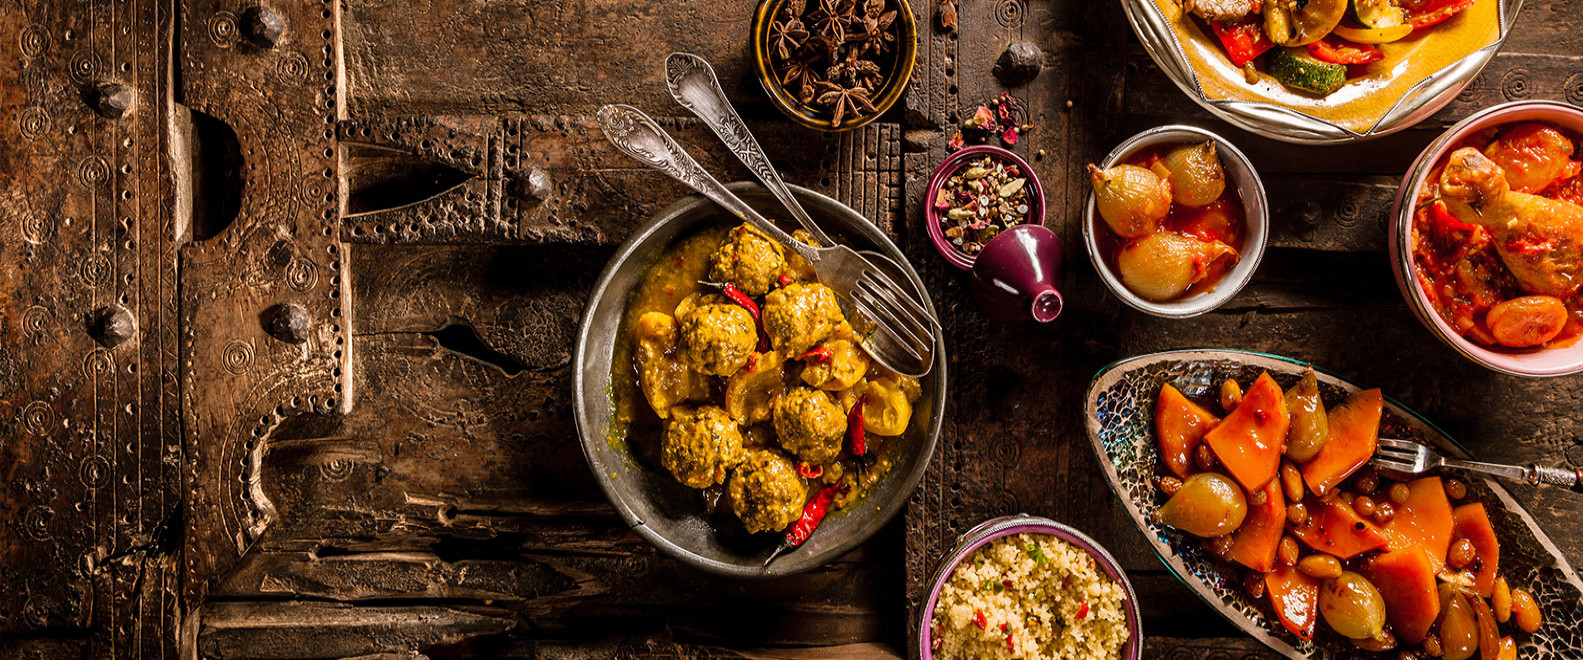 La Cuisine Marocaine  Recettes Maroc : Mechoui, Rfissa